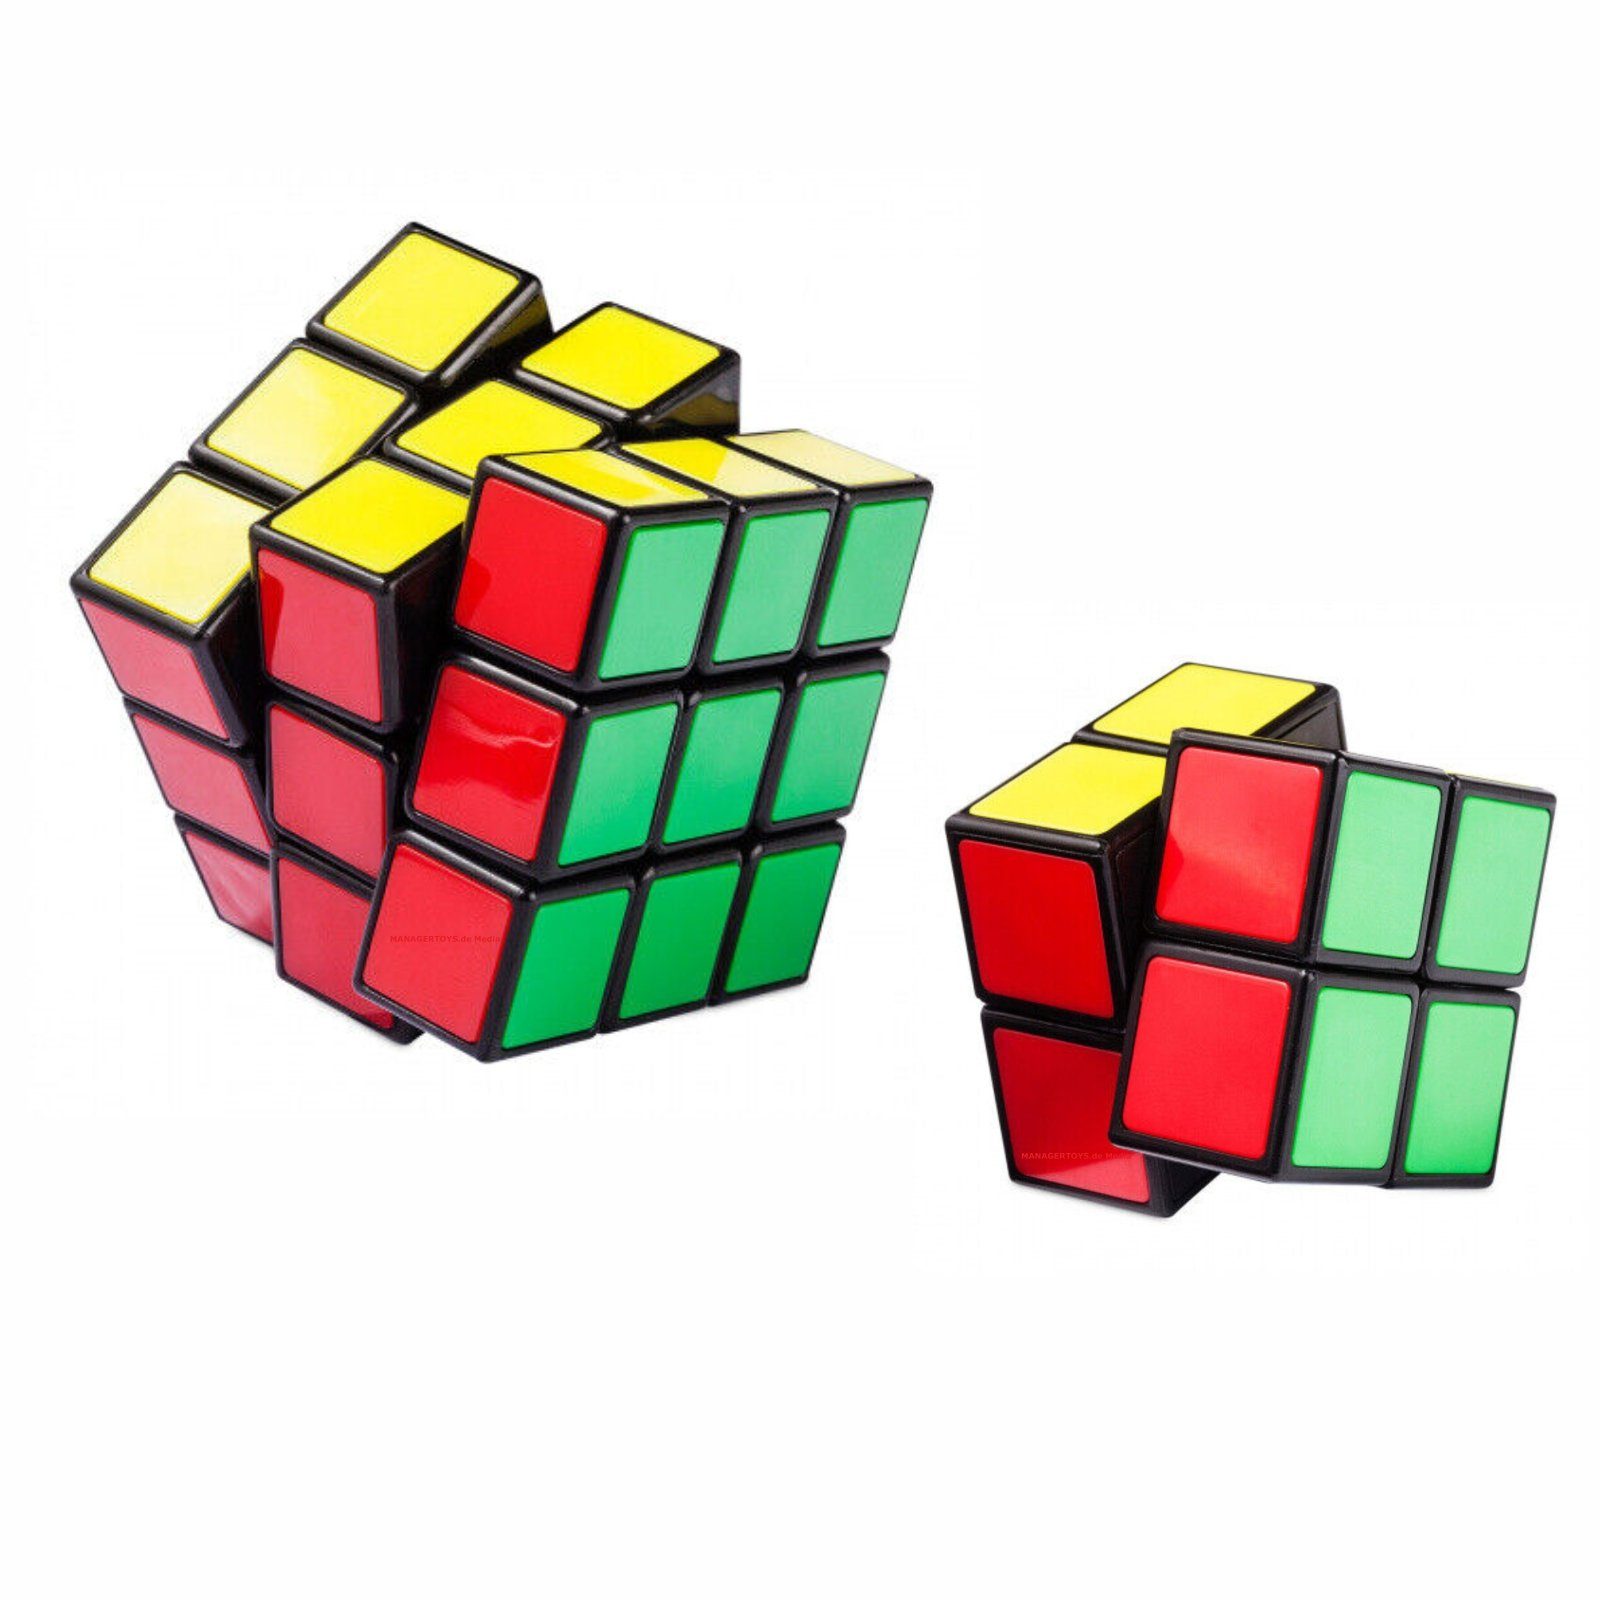 Rubik´s 3D-Puzzle Original Rubik's Cube 3 x 3 und 2 x 2 BASIC SET zwei Zauberwürfel, Puzzleteile